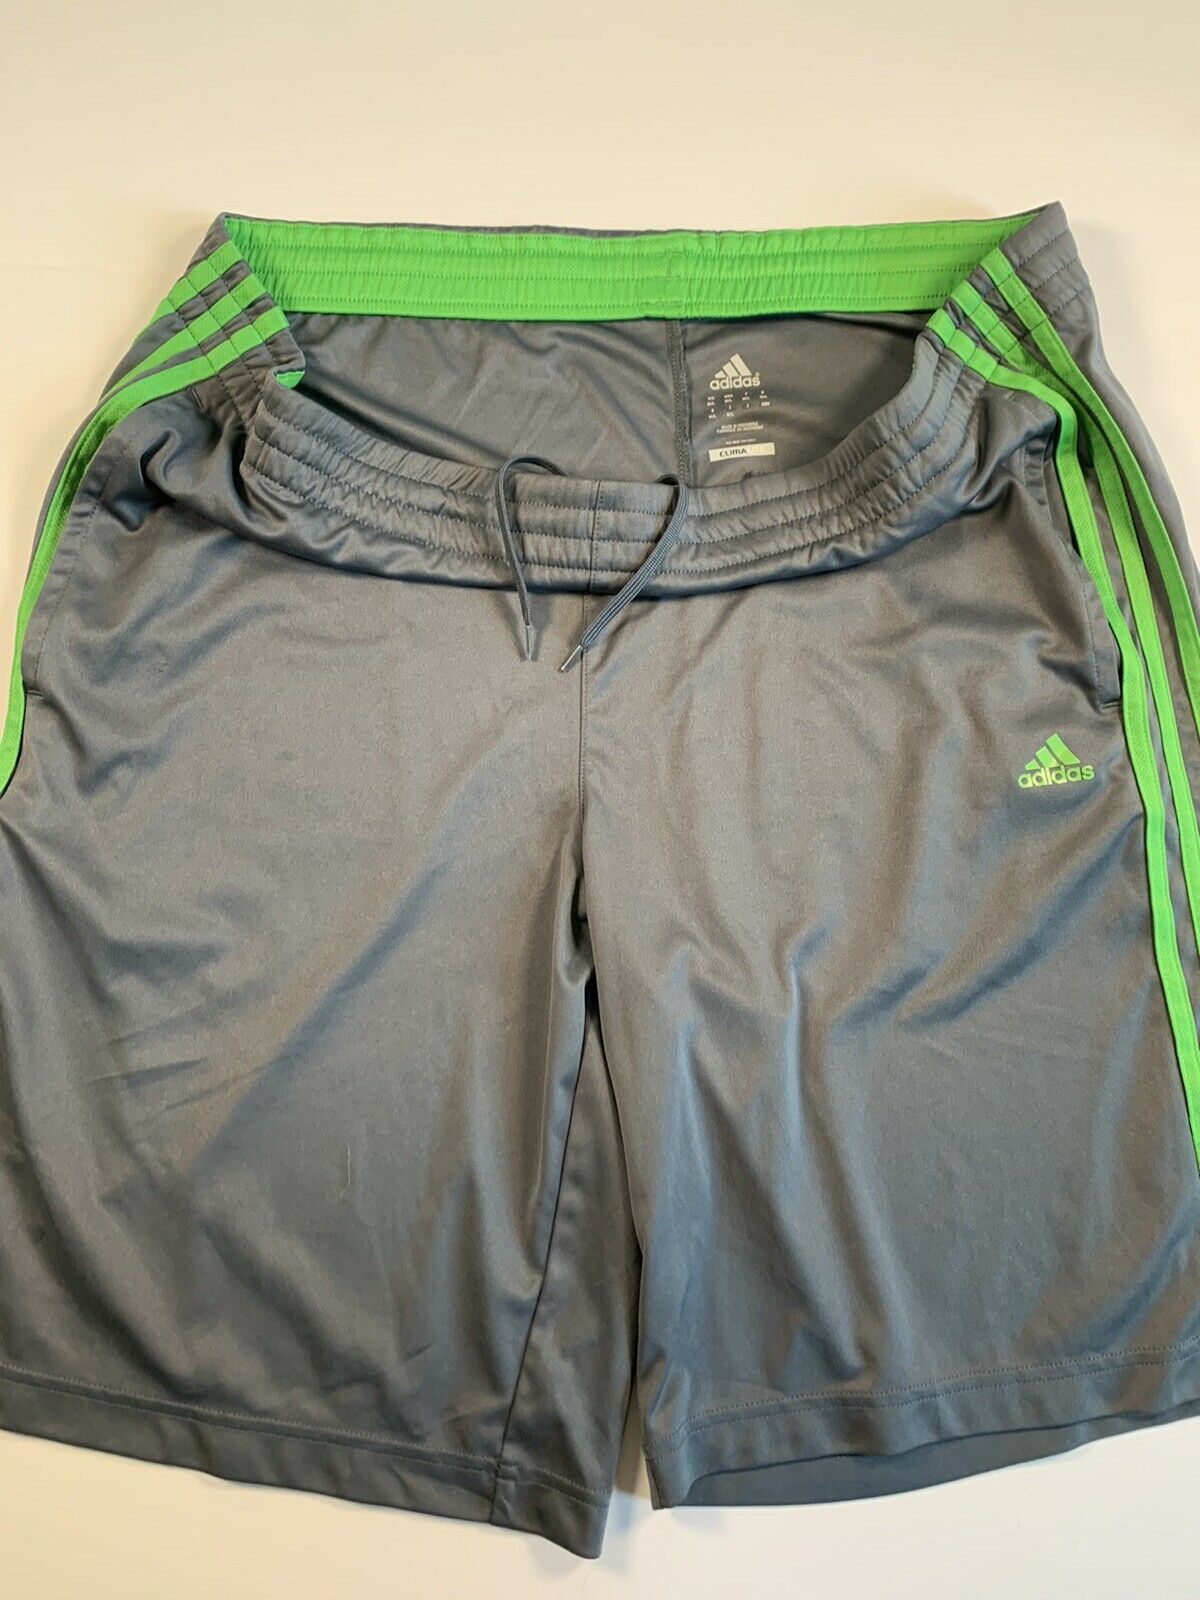 Adidas Mens Size Large Clima Lite Grey And Green Active Shorts